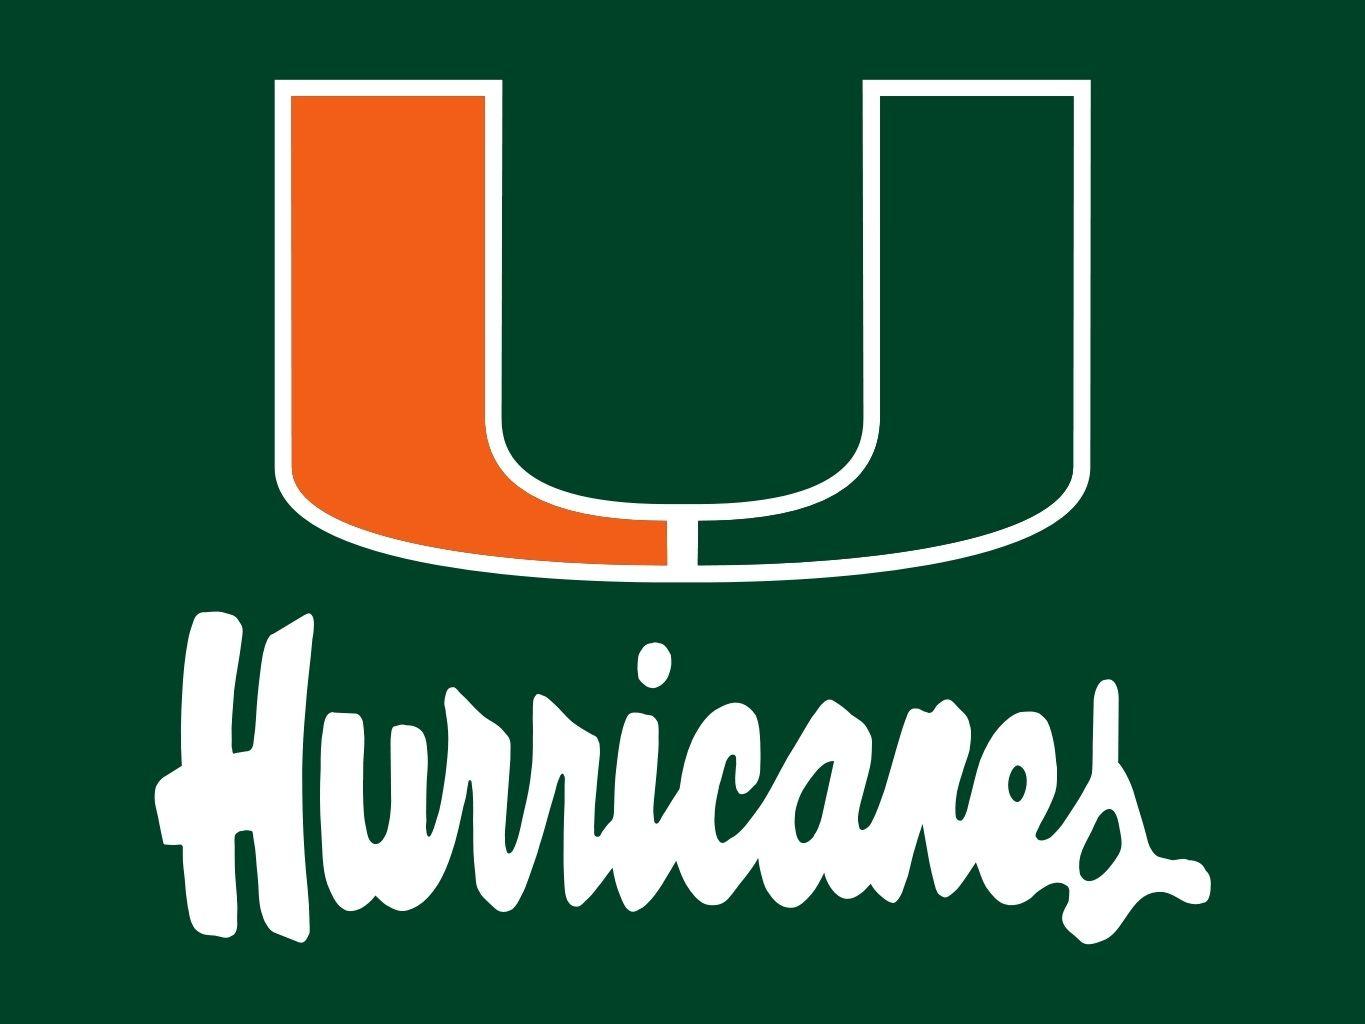 U Football Logo - Miami investigation lawyer says she's a 'patsy' | Miami Hurricanes ...